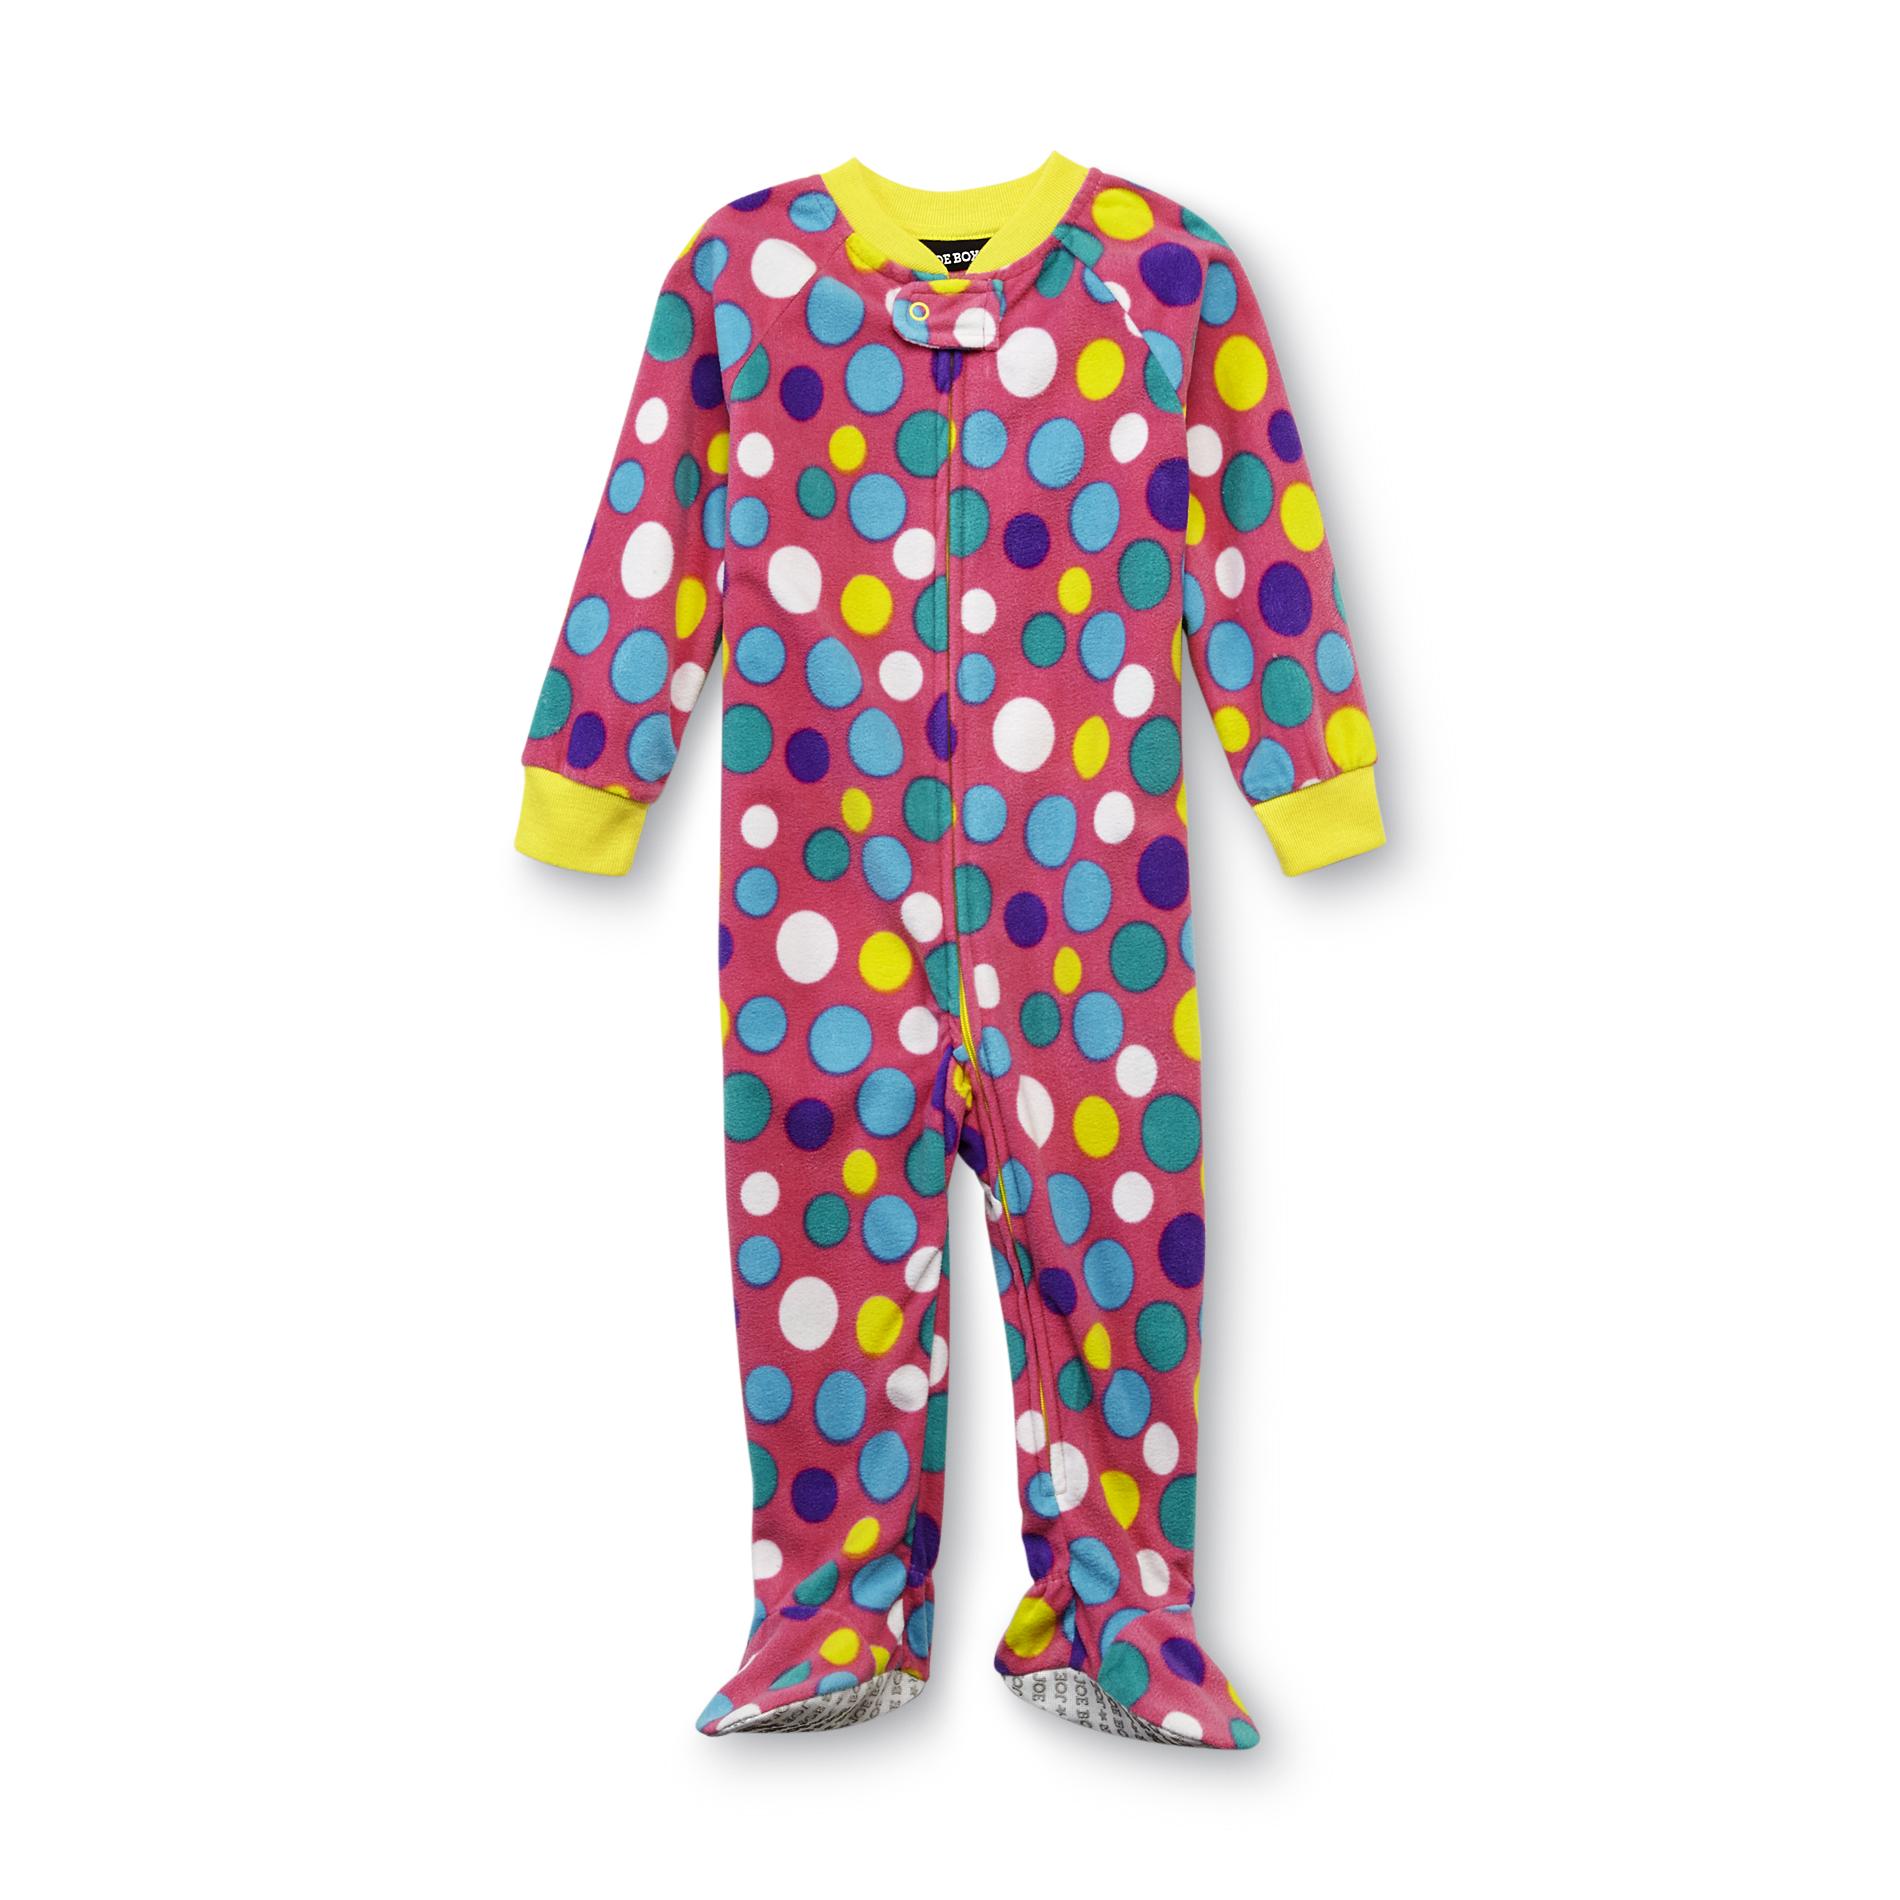 Joe Boxer Infant & Toddler Girl's Fleece Footed Sleeper Pajamas - Polka Dot